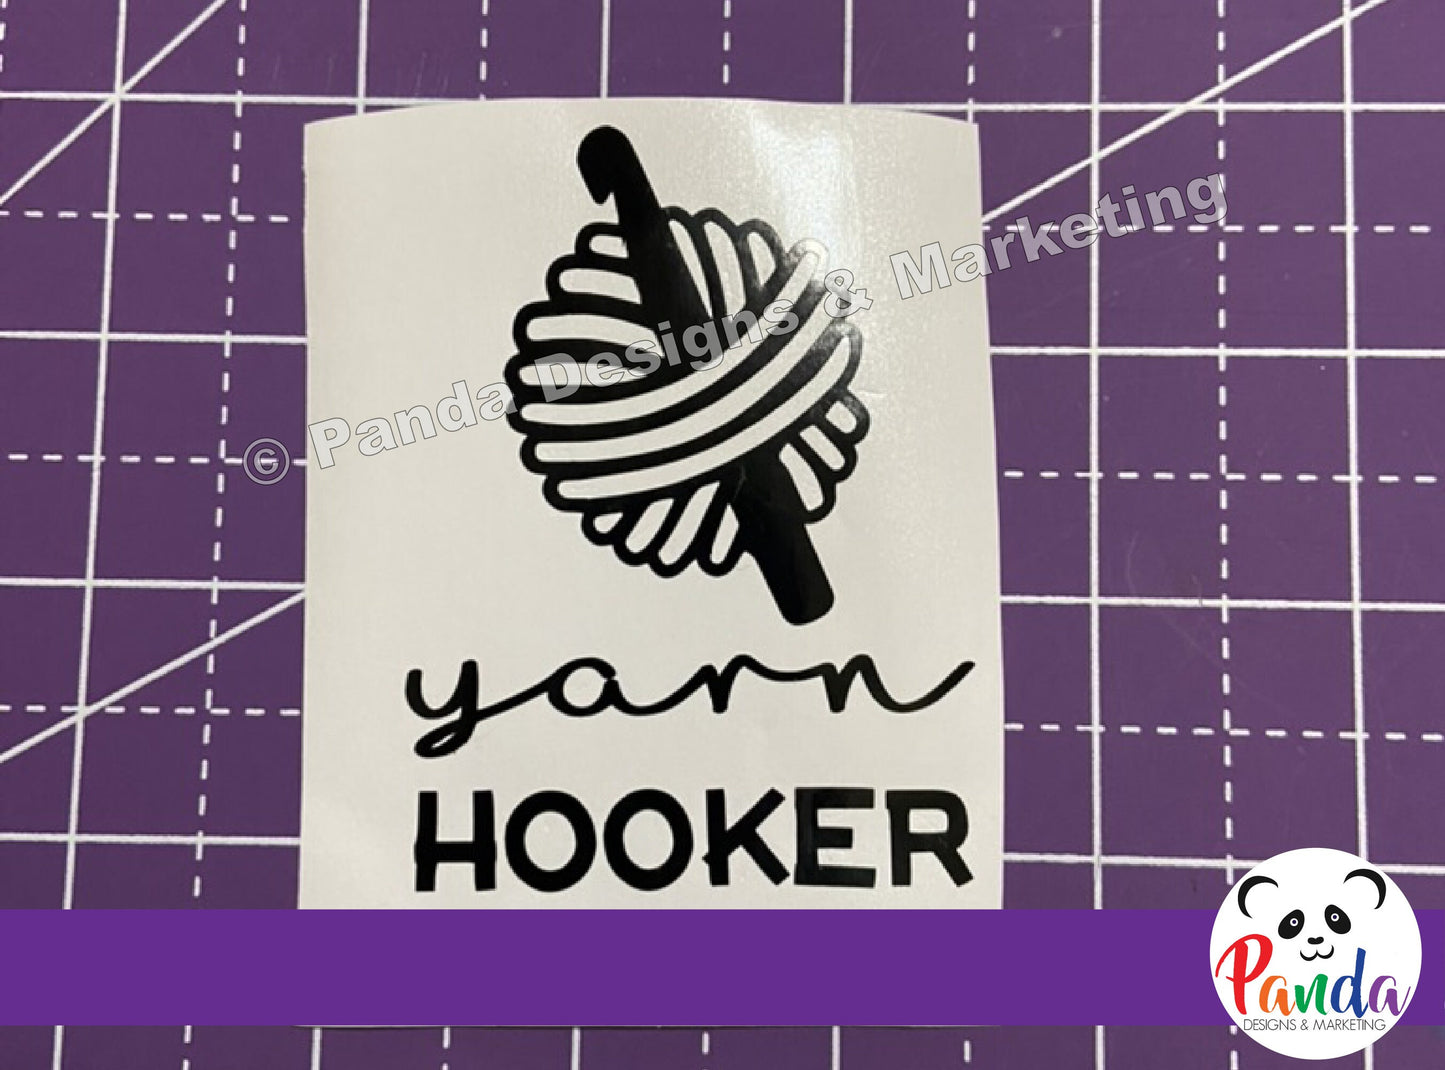 Yarn Hooker vinyl decal sticker. vertical layout. Funny die-cut laptop sticker for wool and crochet lovers.